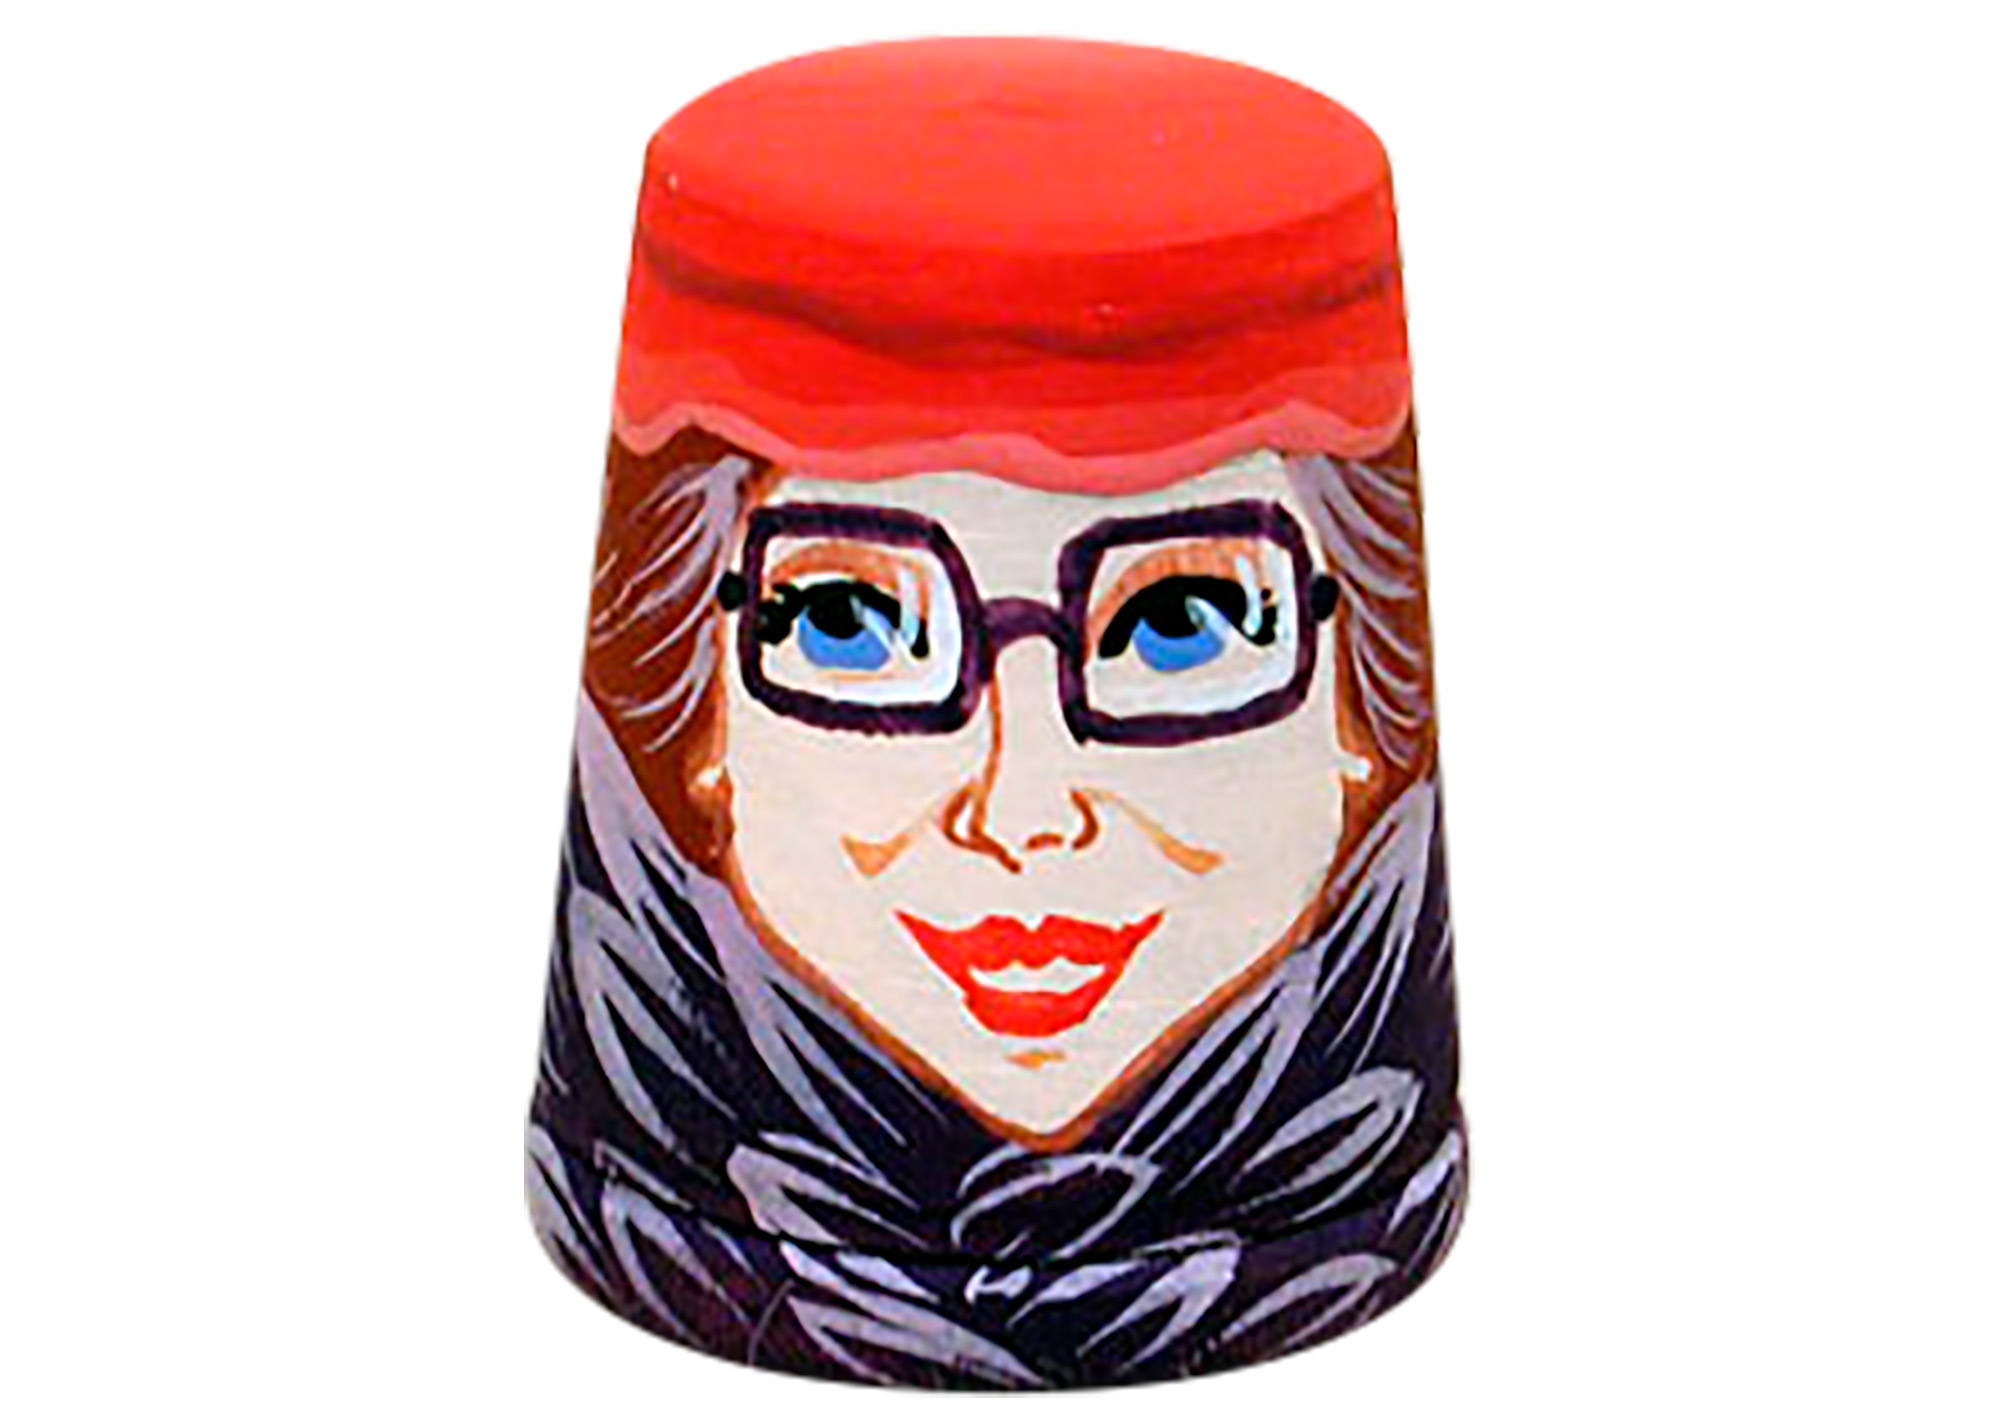 Buy Red Hat Lady Thimble, Wood 1" at GoldenCockerel.com